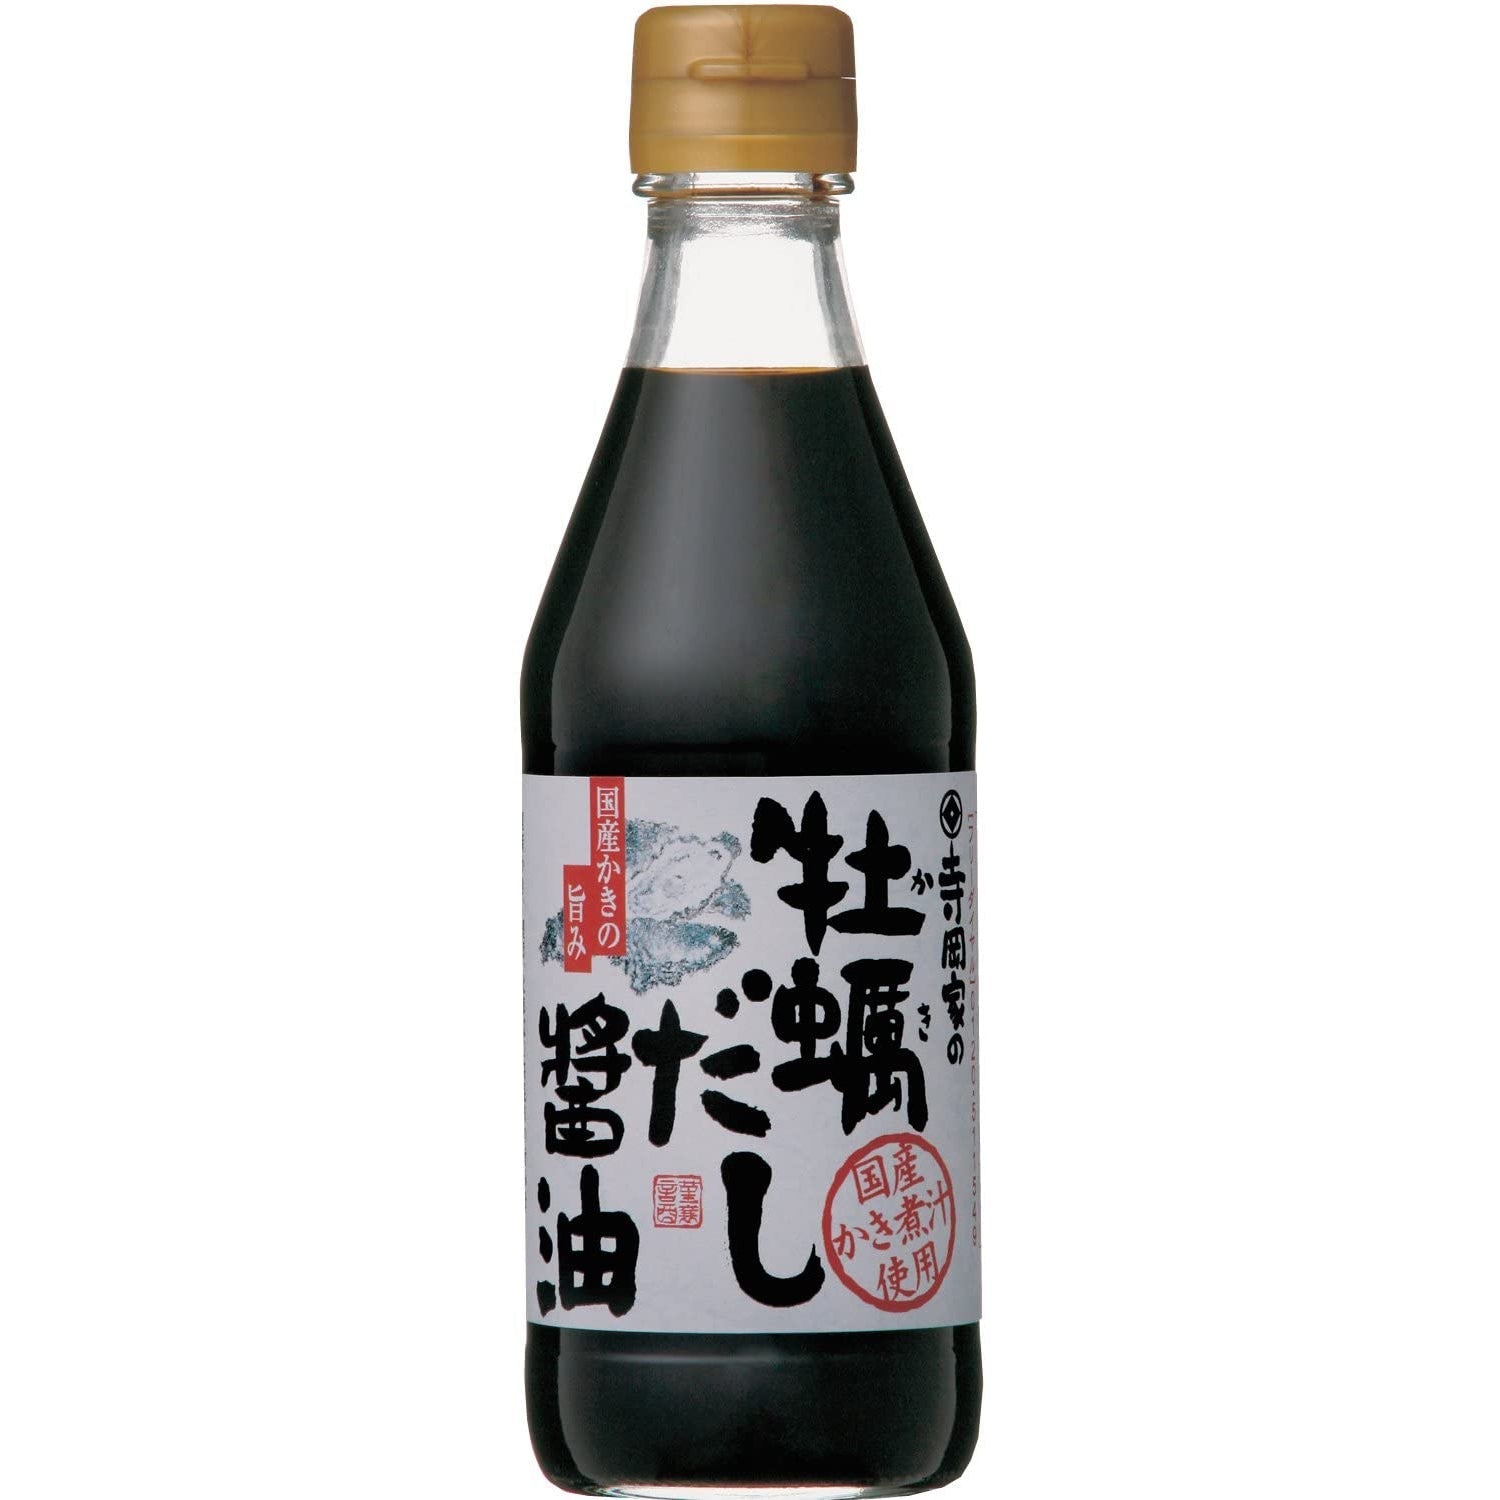 Teraoka Dashi Shoyu Japanese Oyster Soy Sauce 300ml, Japanese Taste